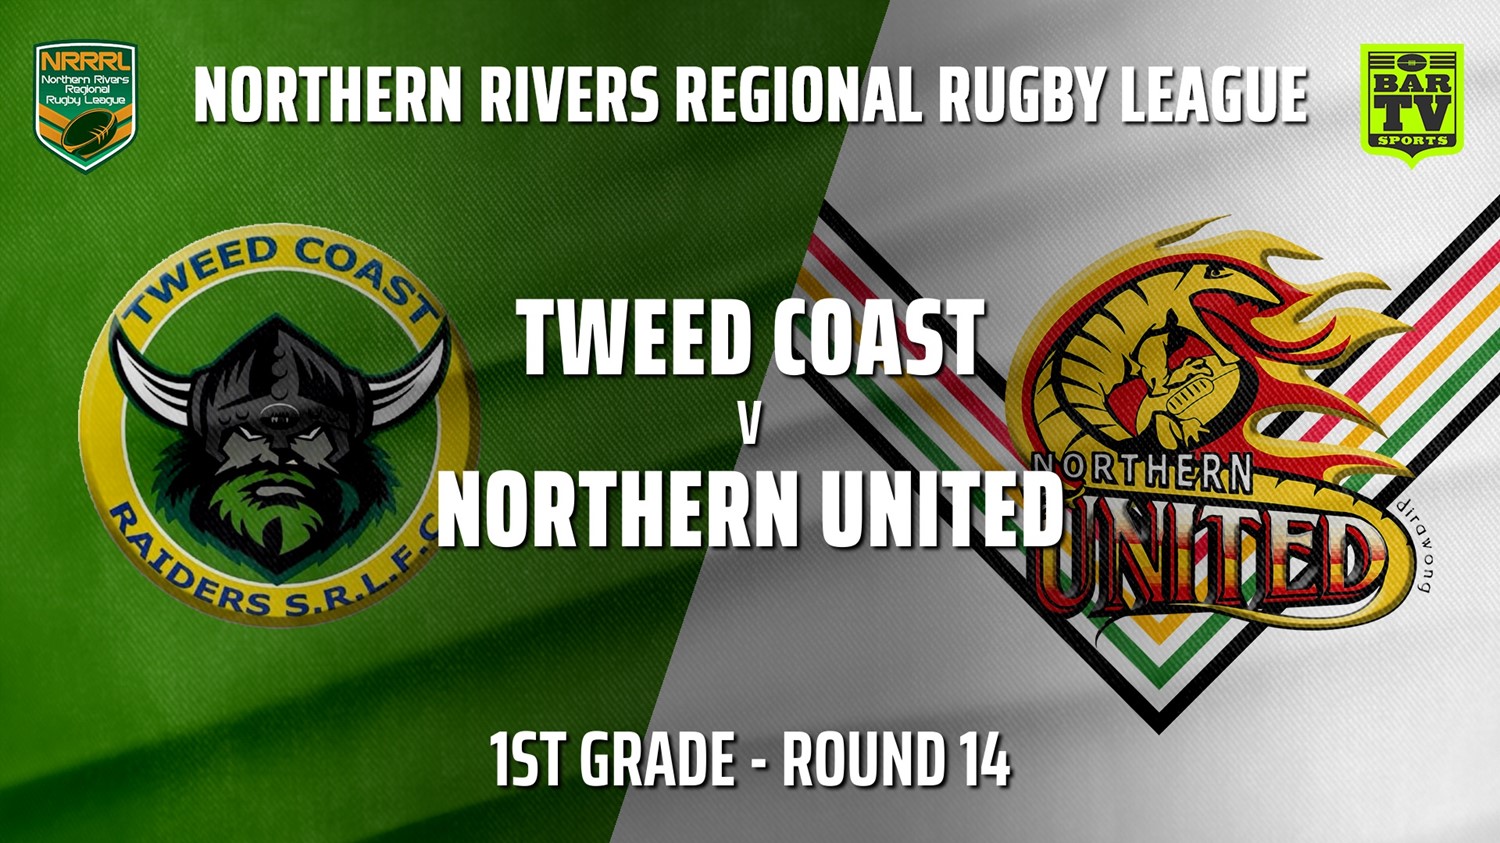 210808-Northern Rivers Round 14 - 1st Grade - Tweed Coast Raiders v Northern United Slate Image